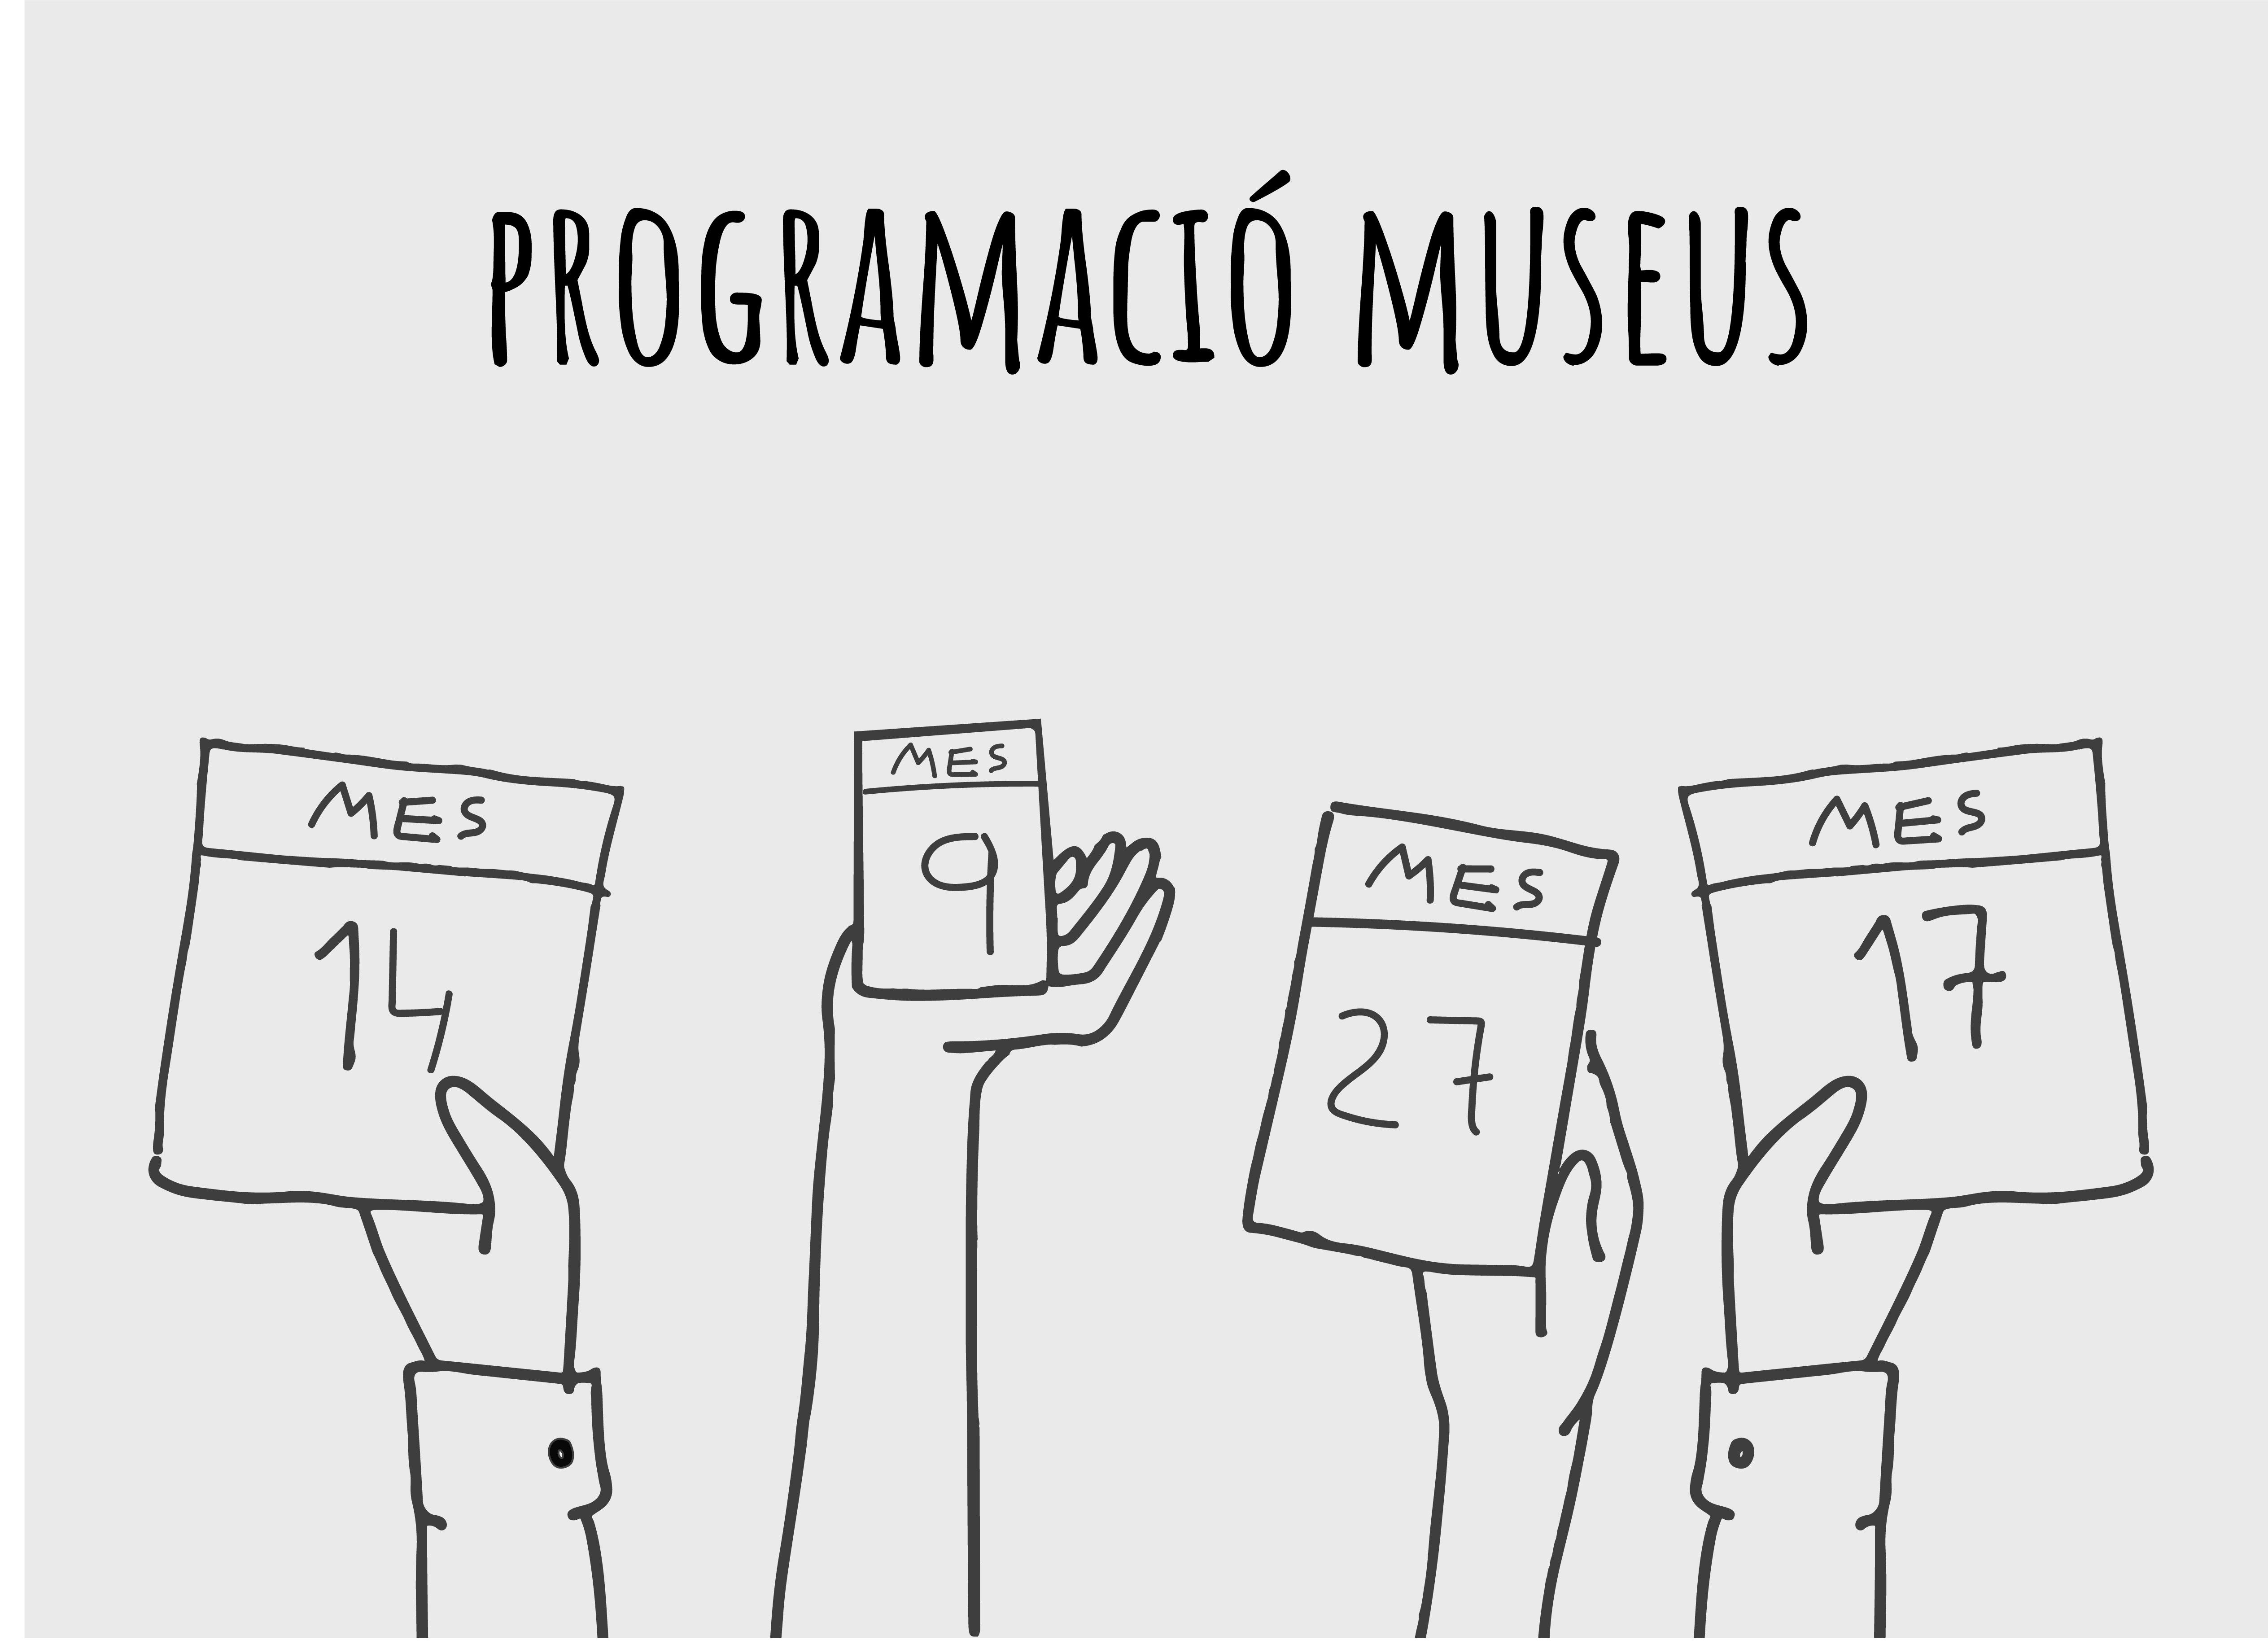 Programació museus